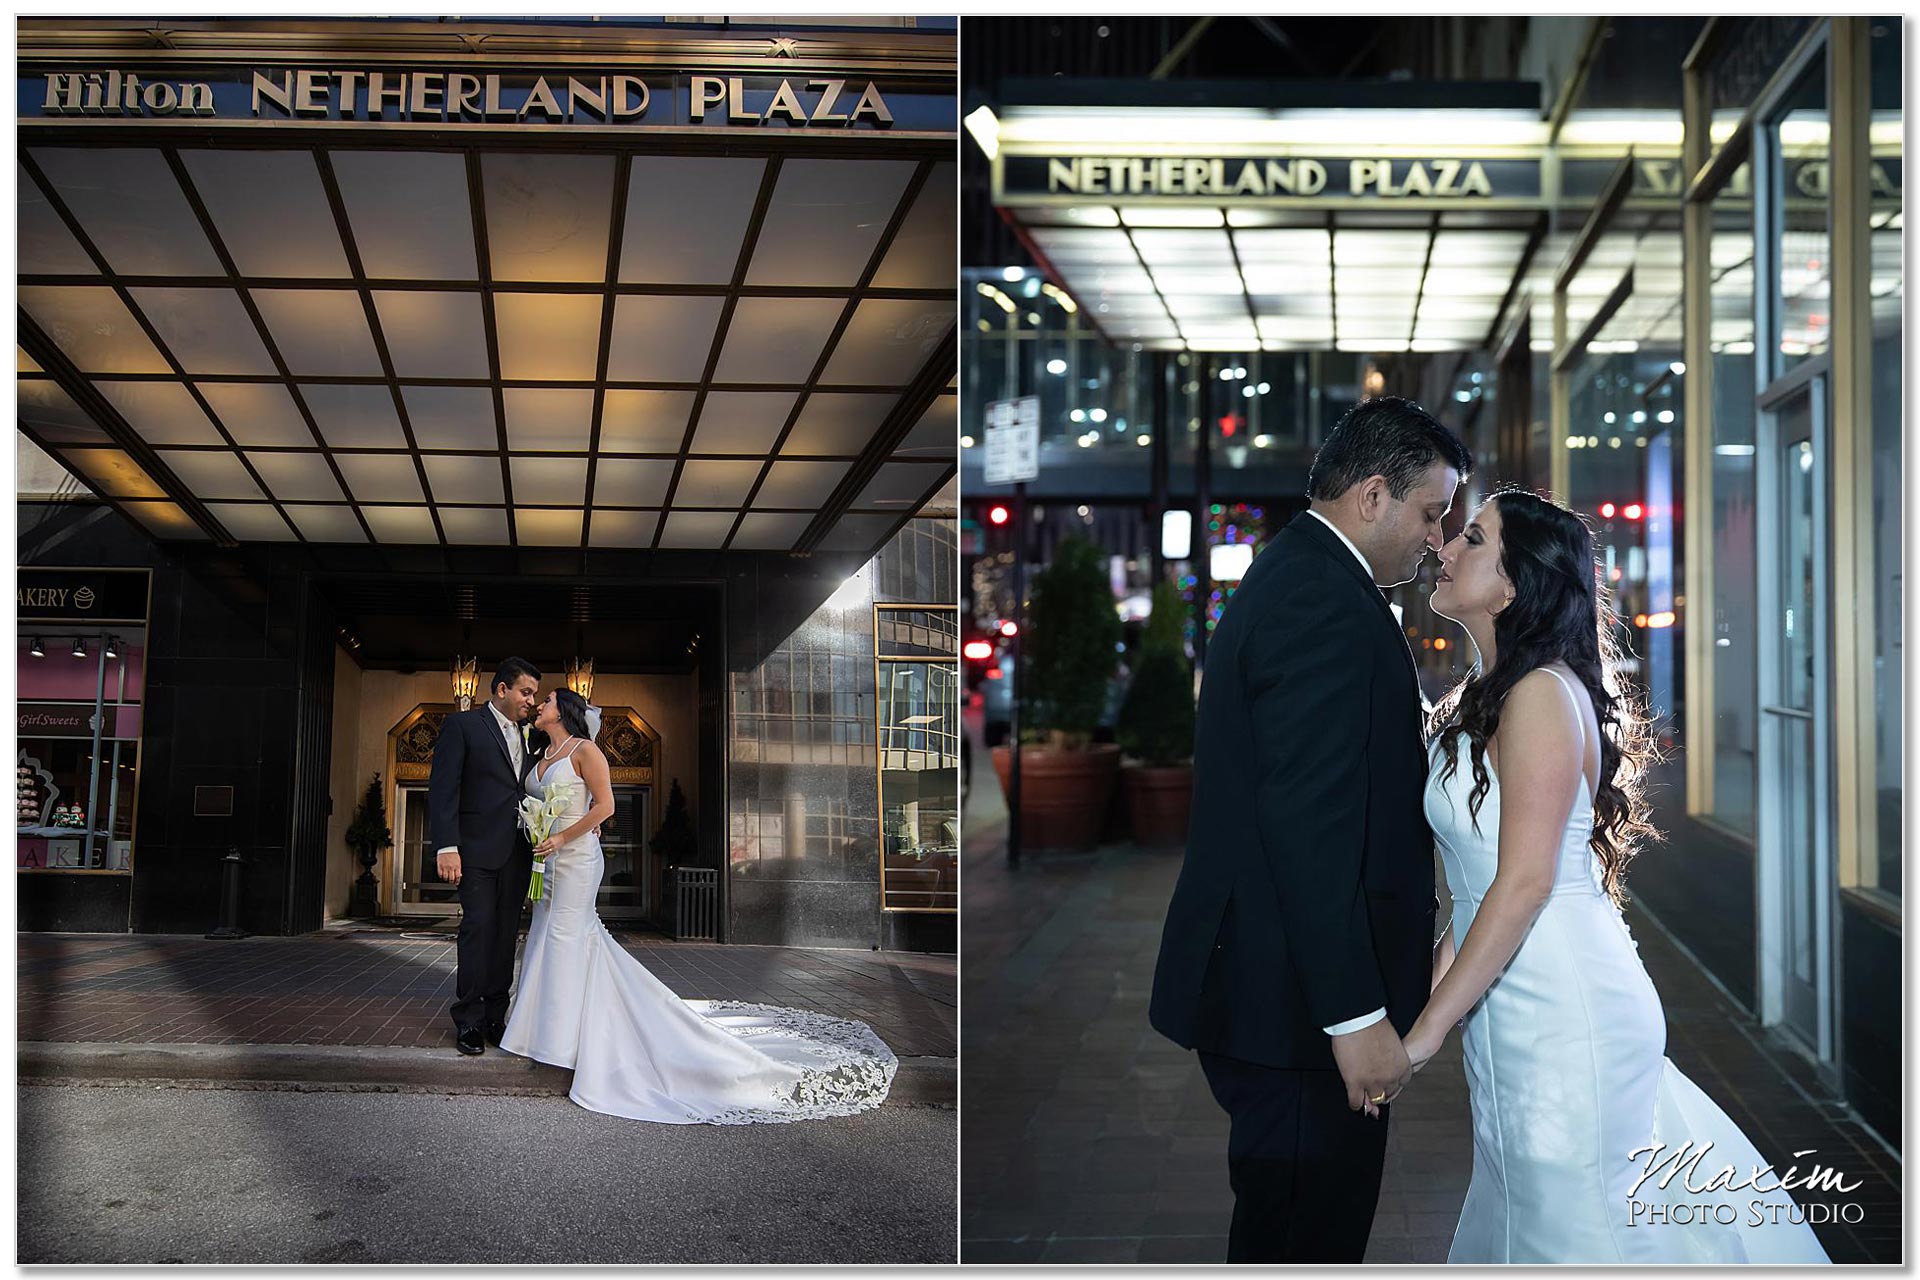 Hilton Netherland Plaza wedding portraits